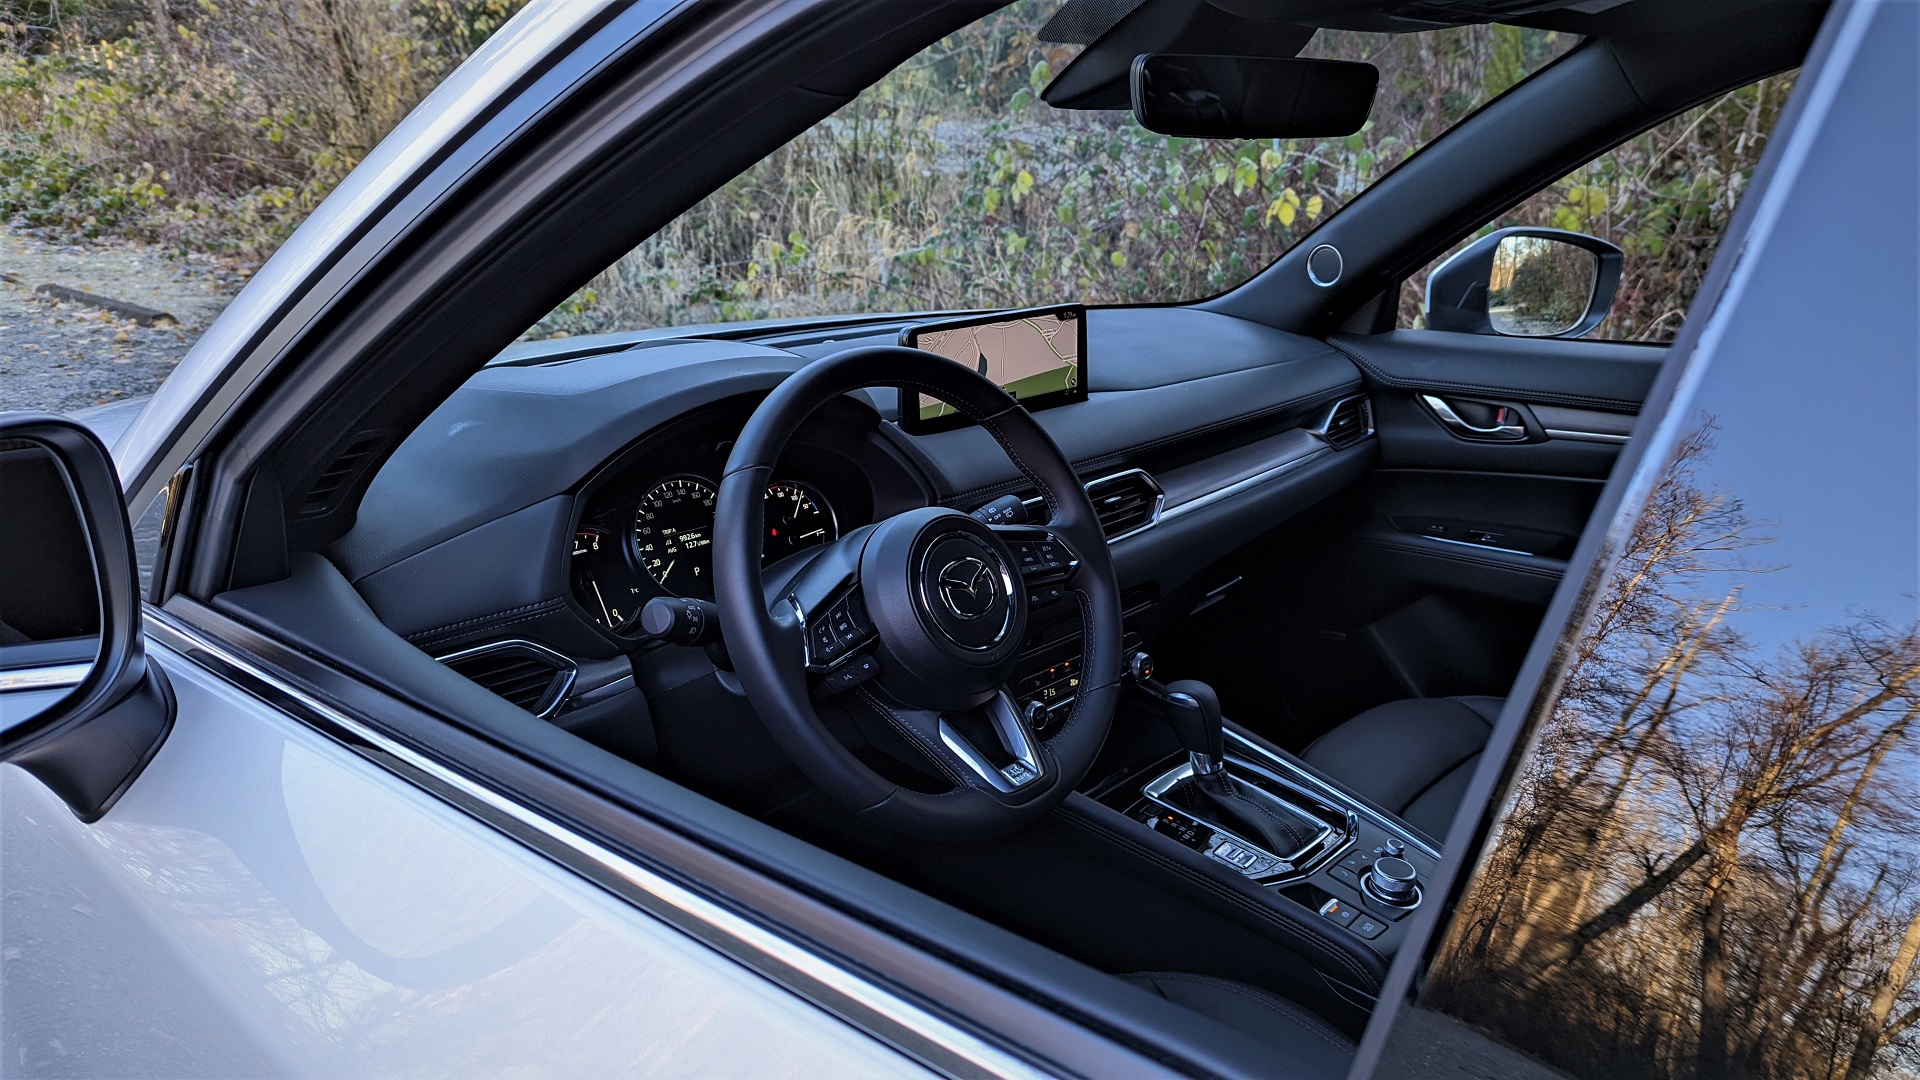 Looking inside driver's window Mazda CX-5